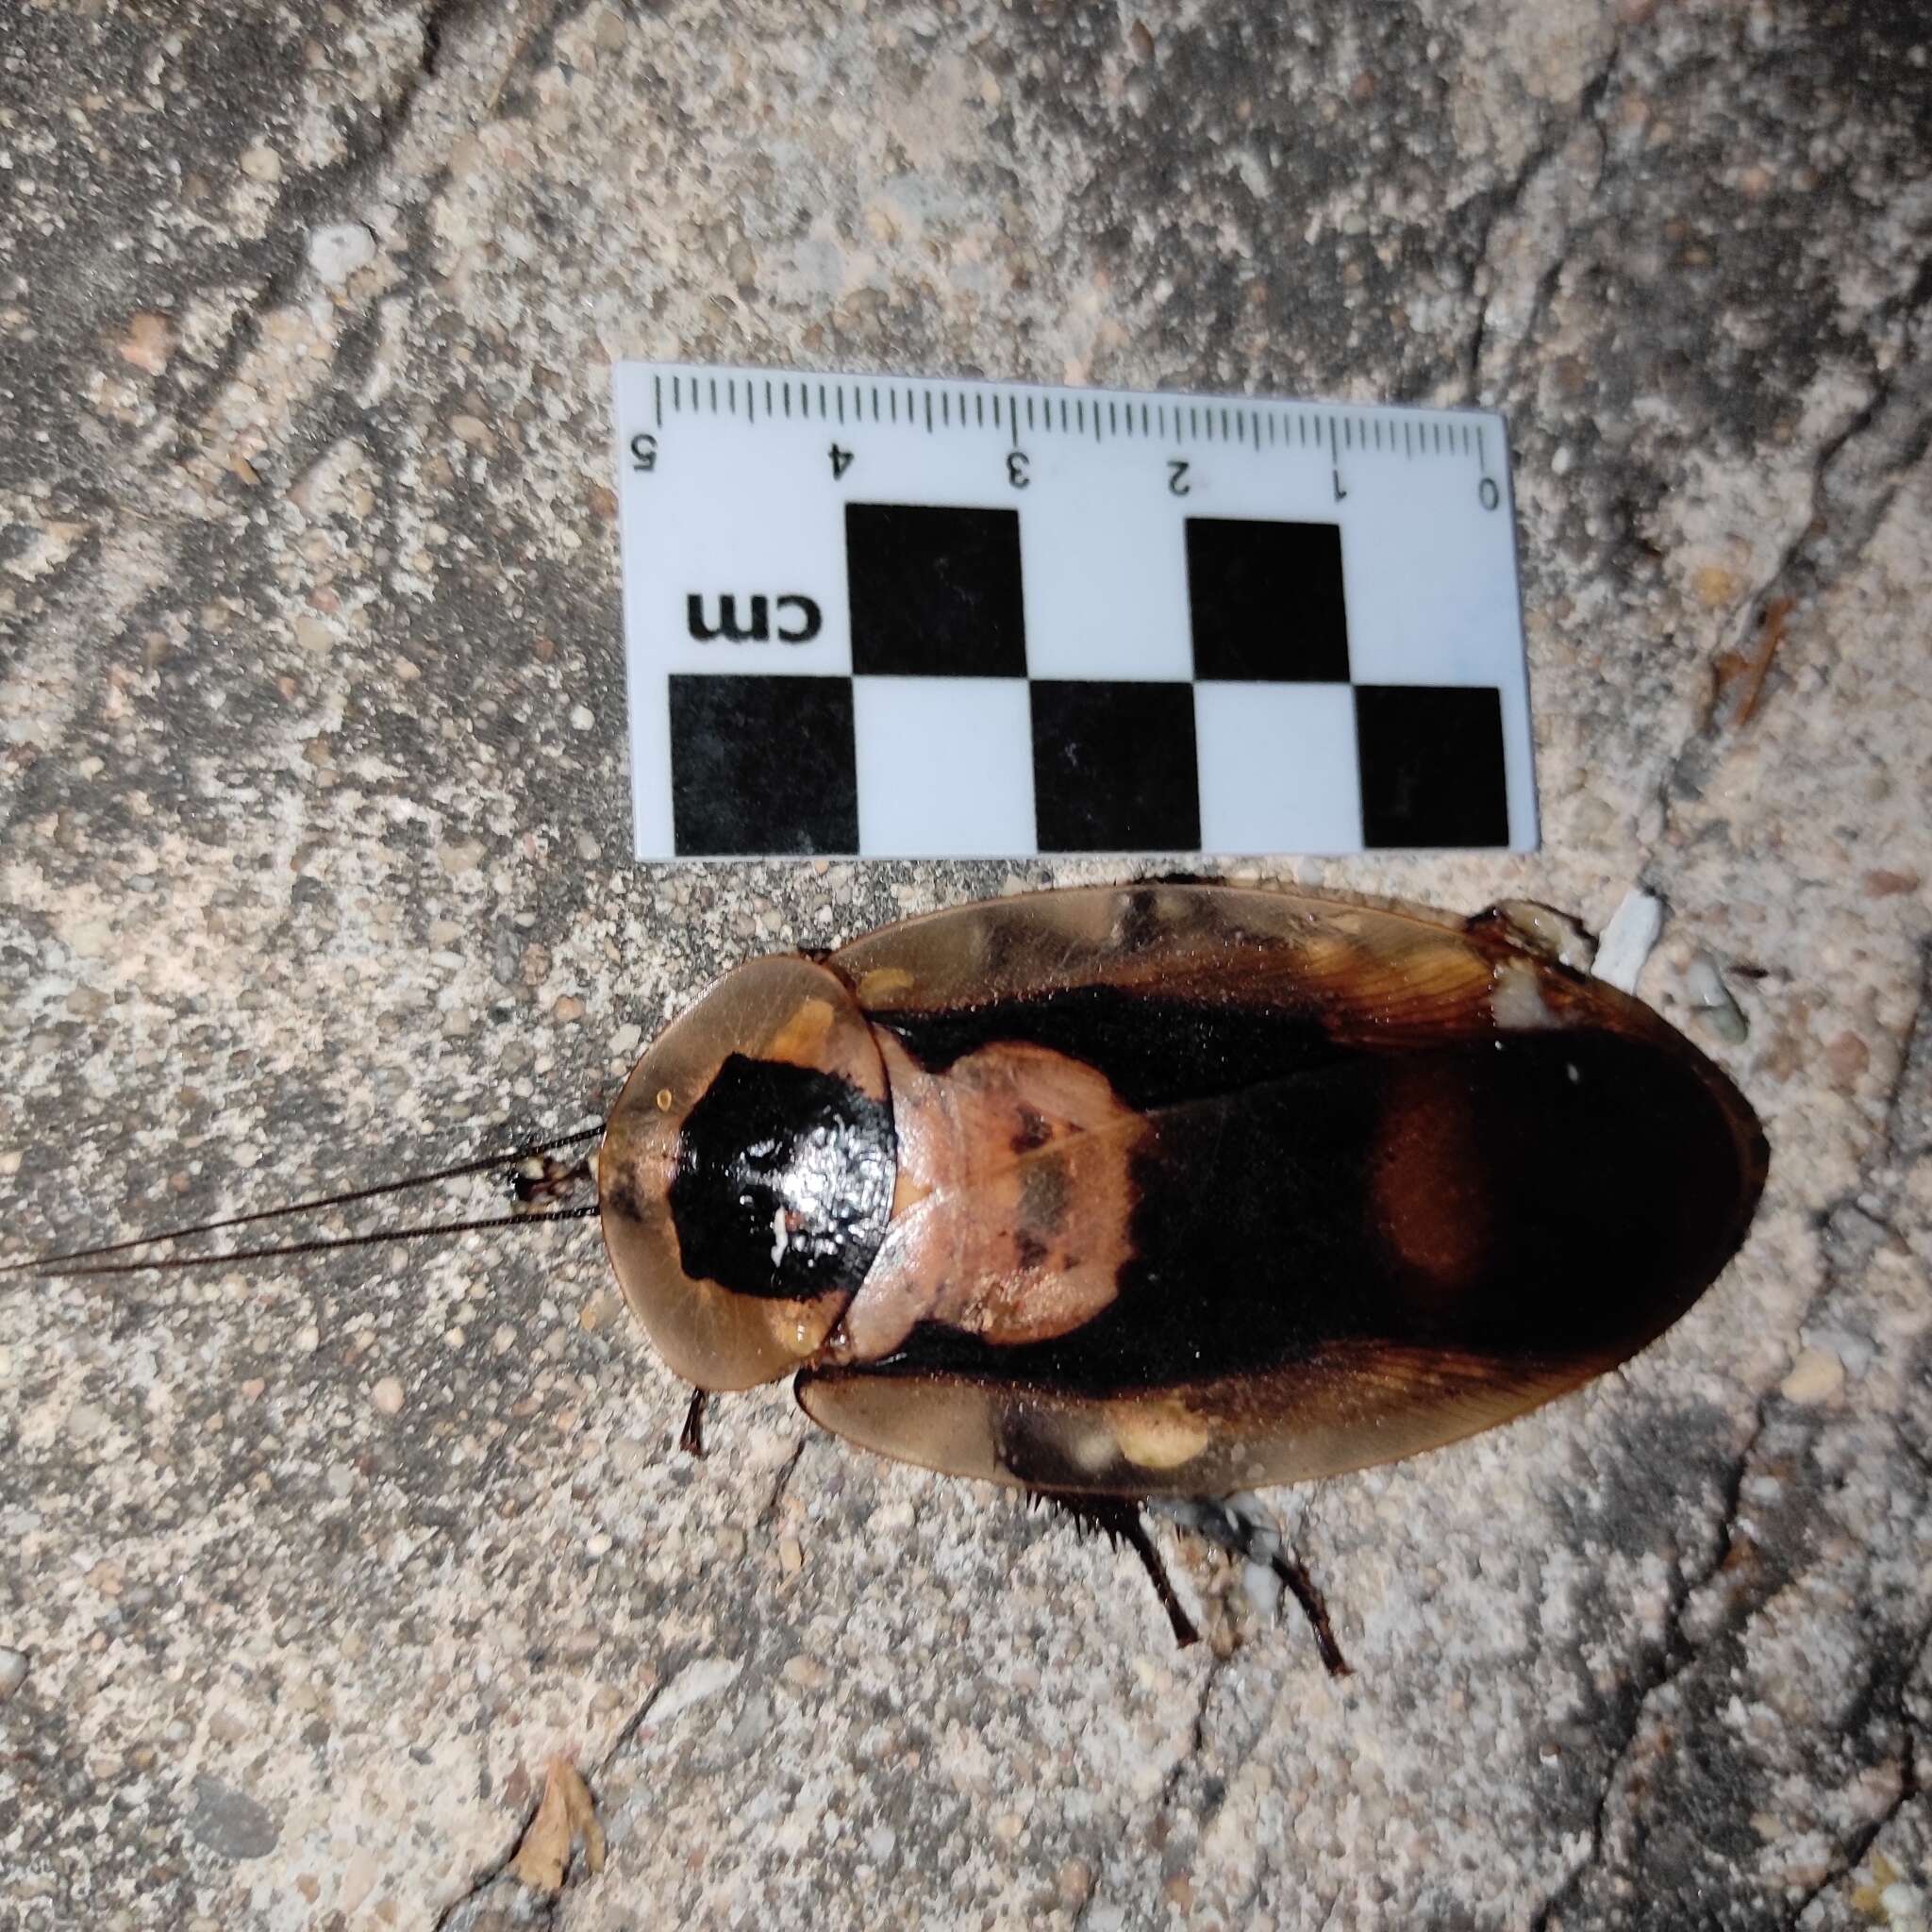 Image of Death's Head Cockroach